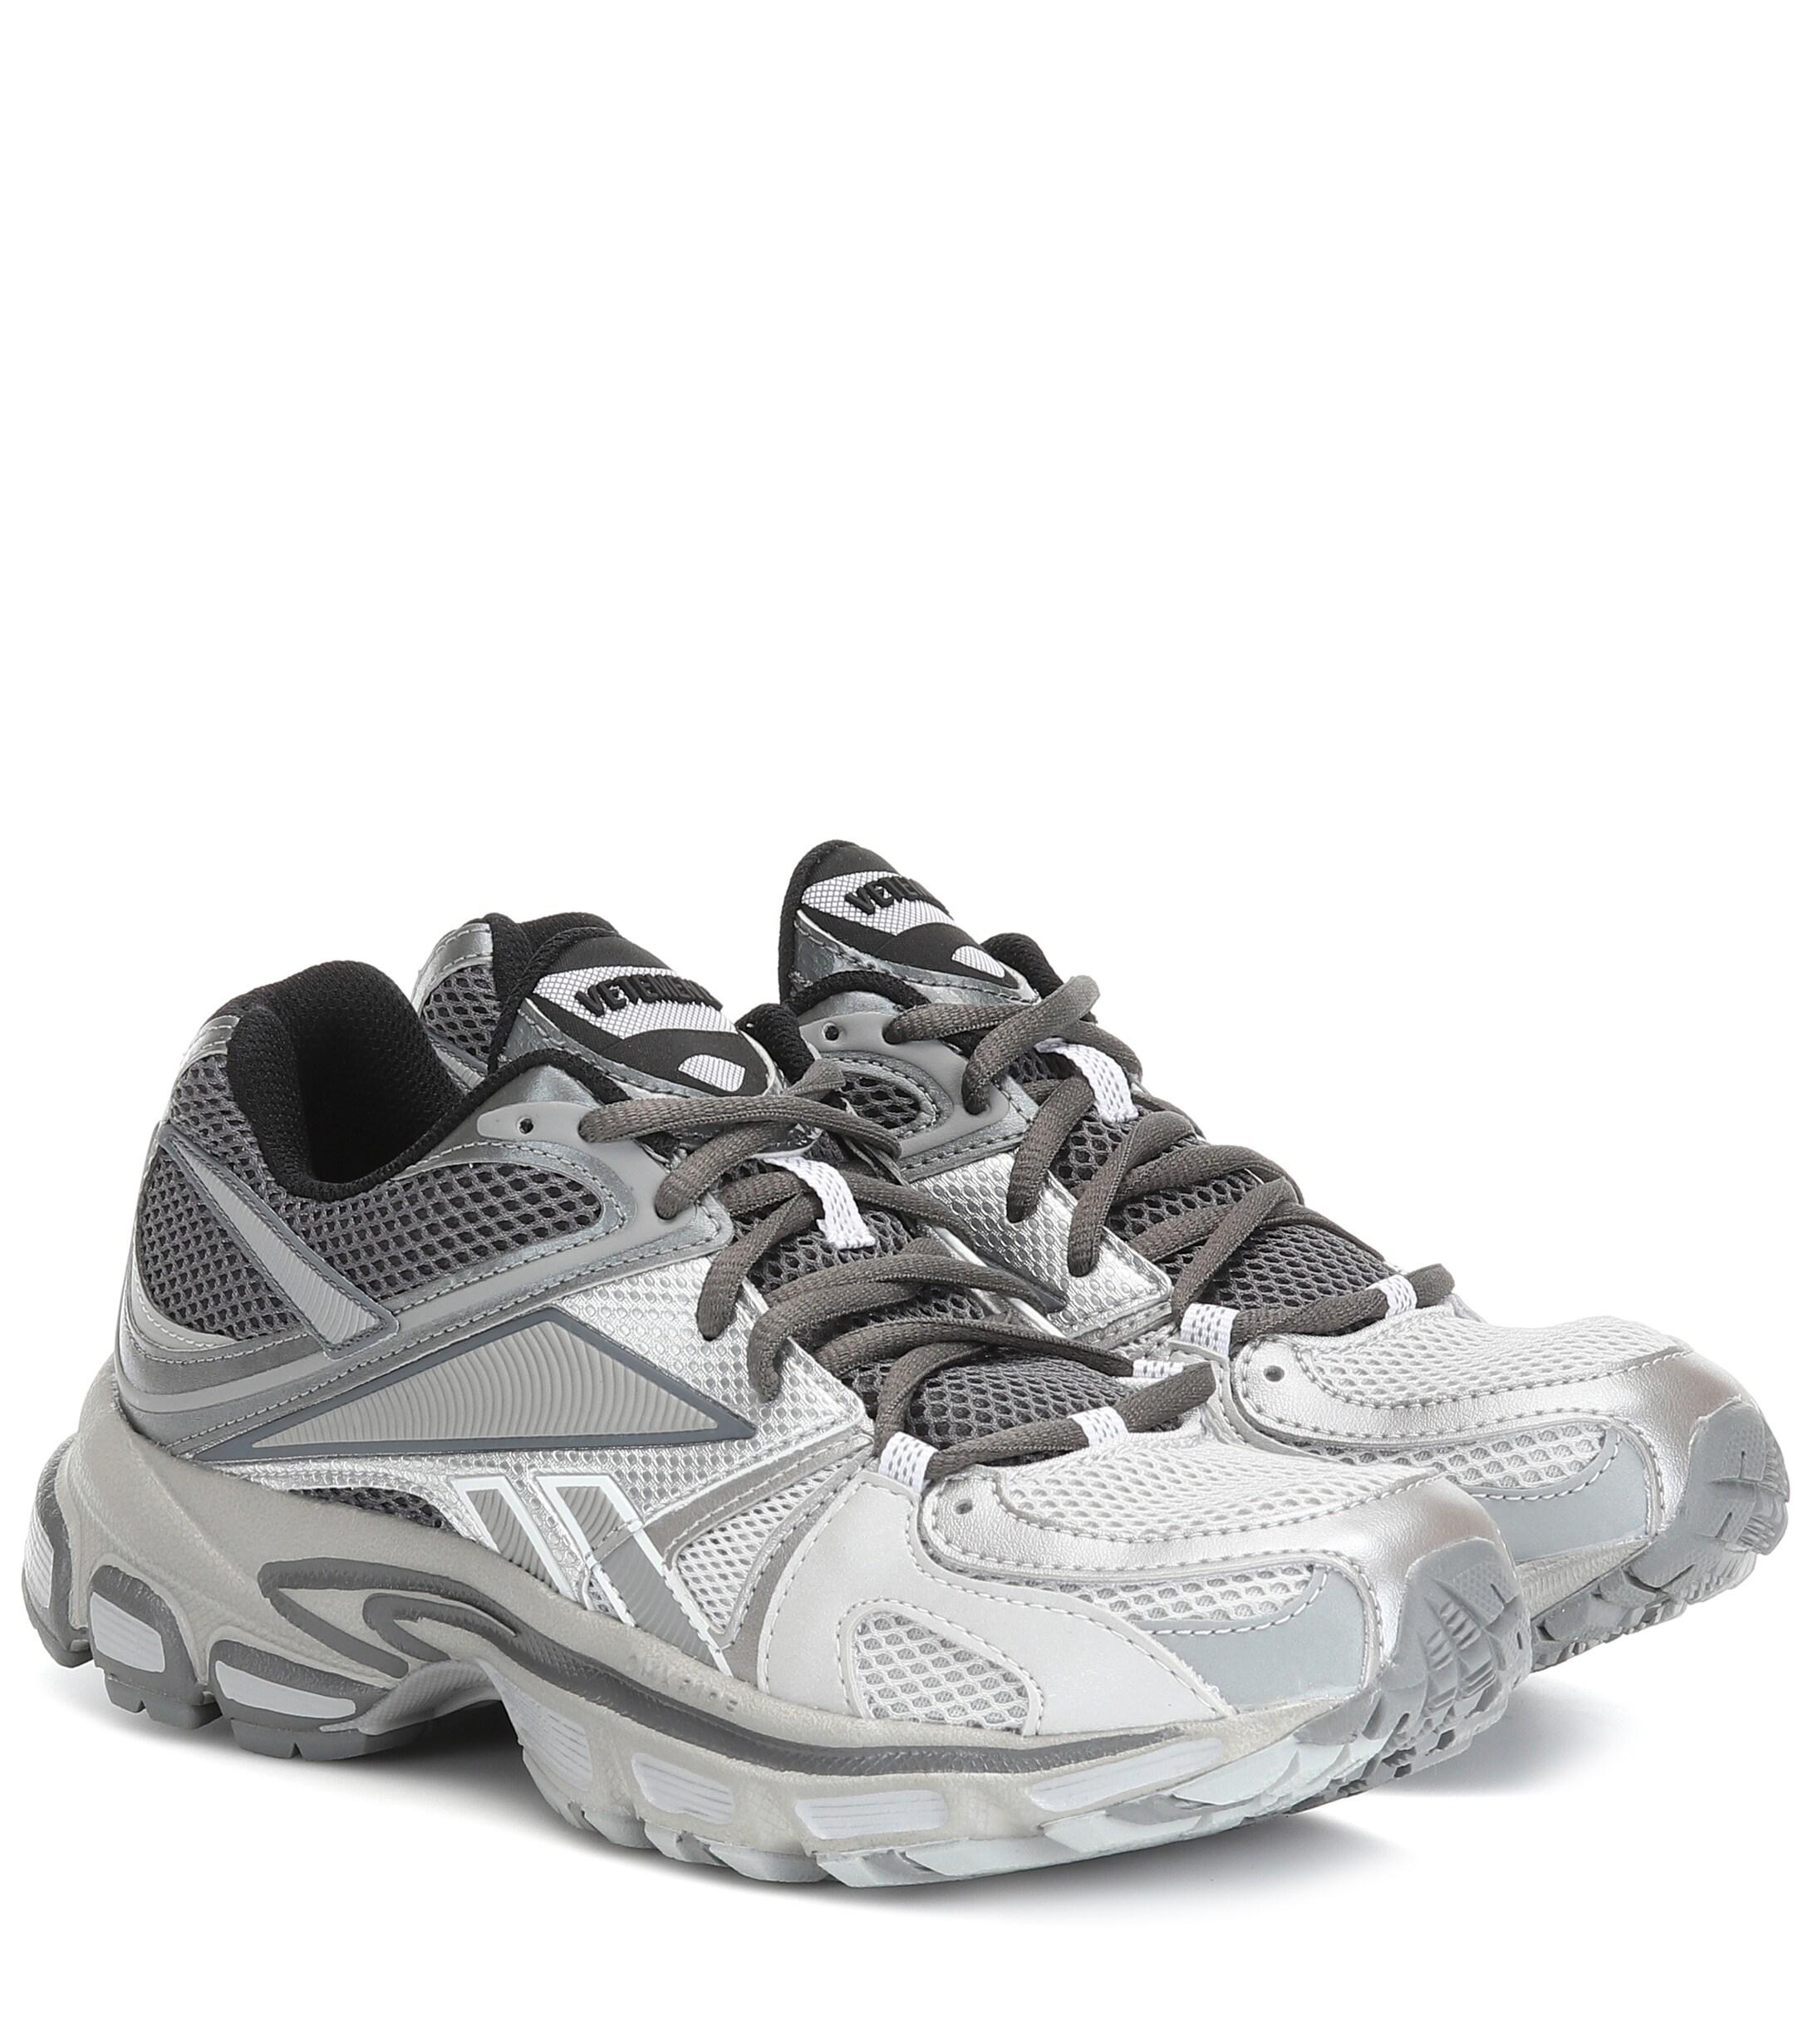 Vetements X Reebok Spike Runner 200 Sneakers in Metallic | Lyst